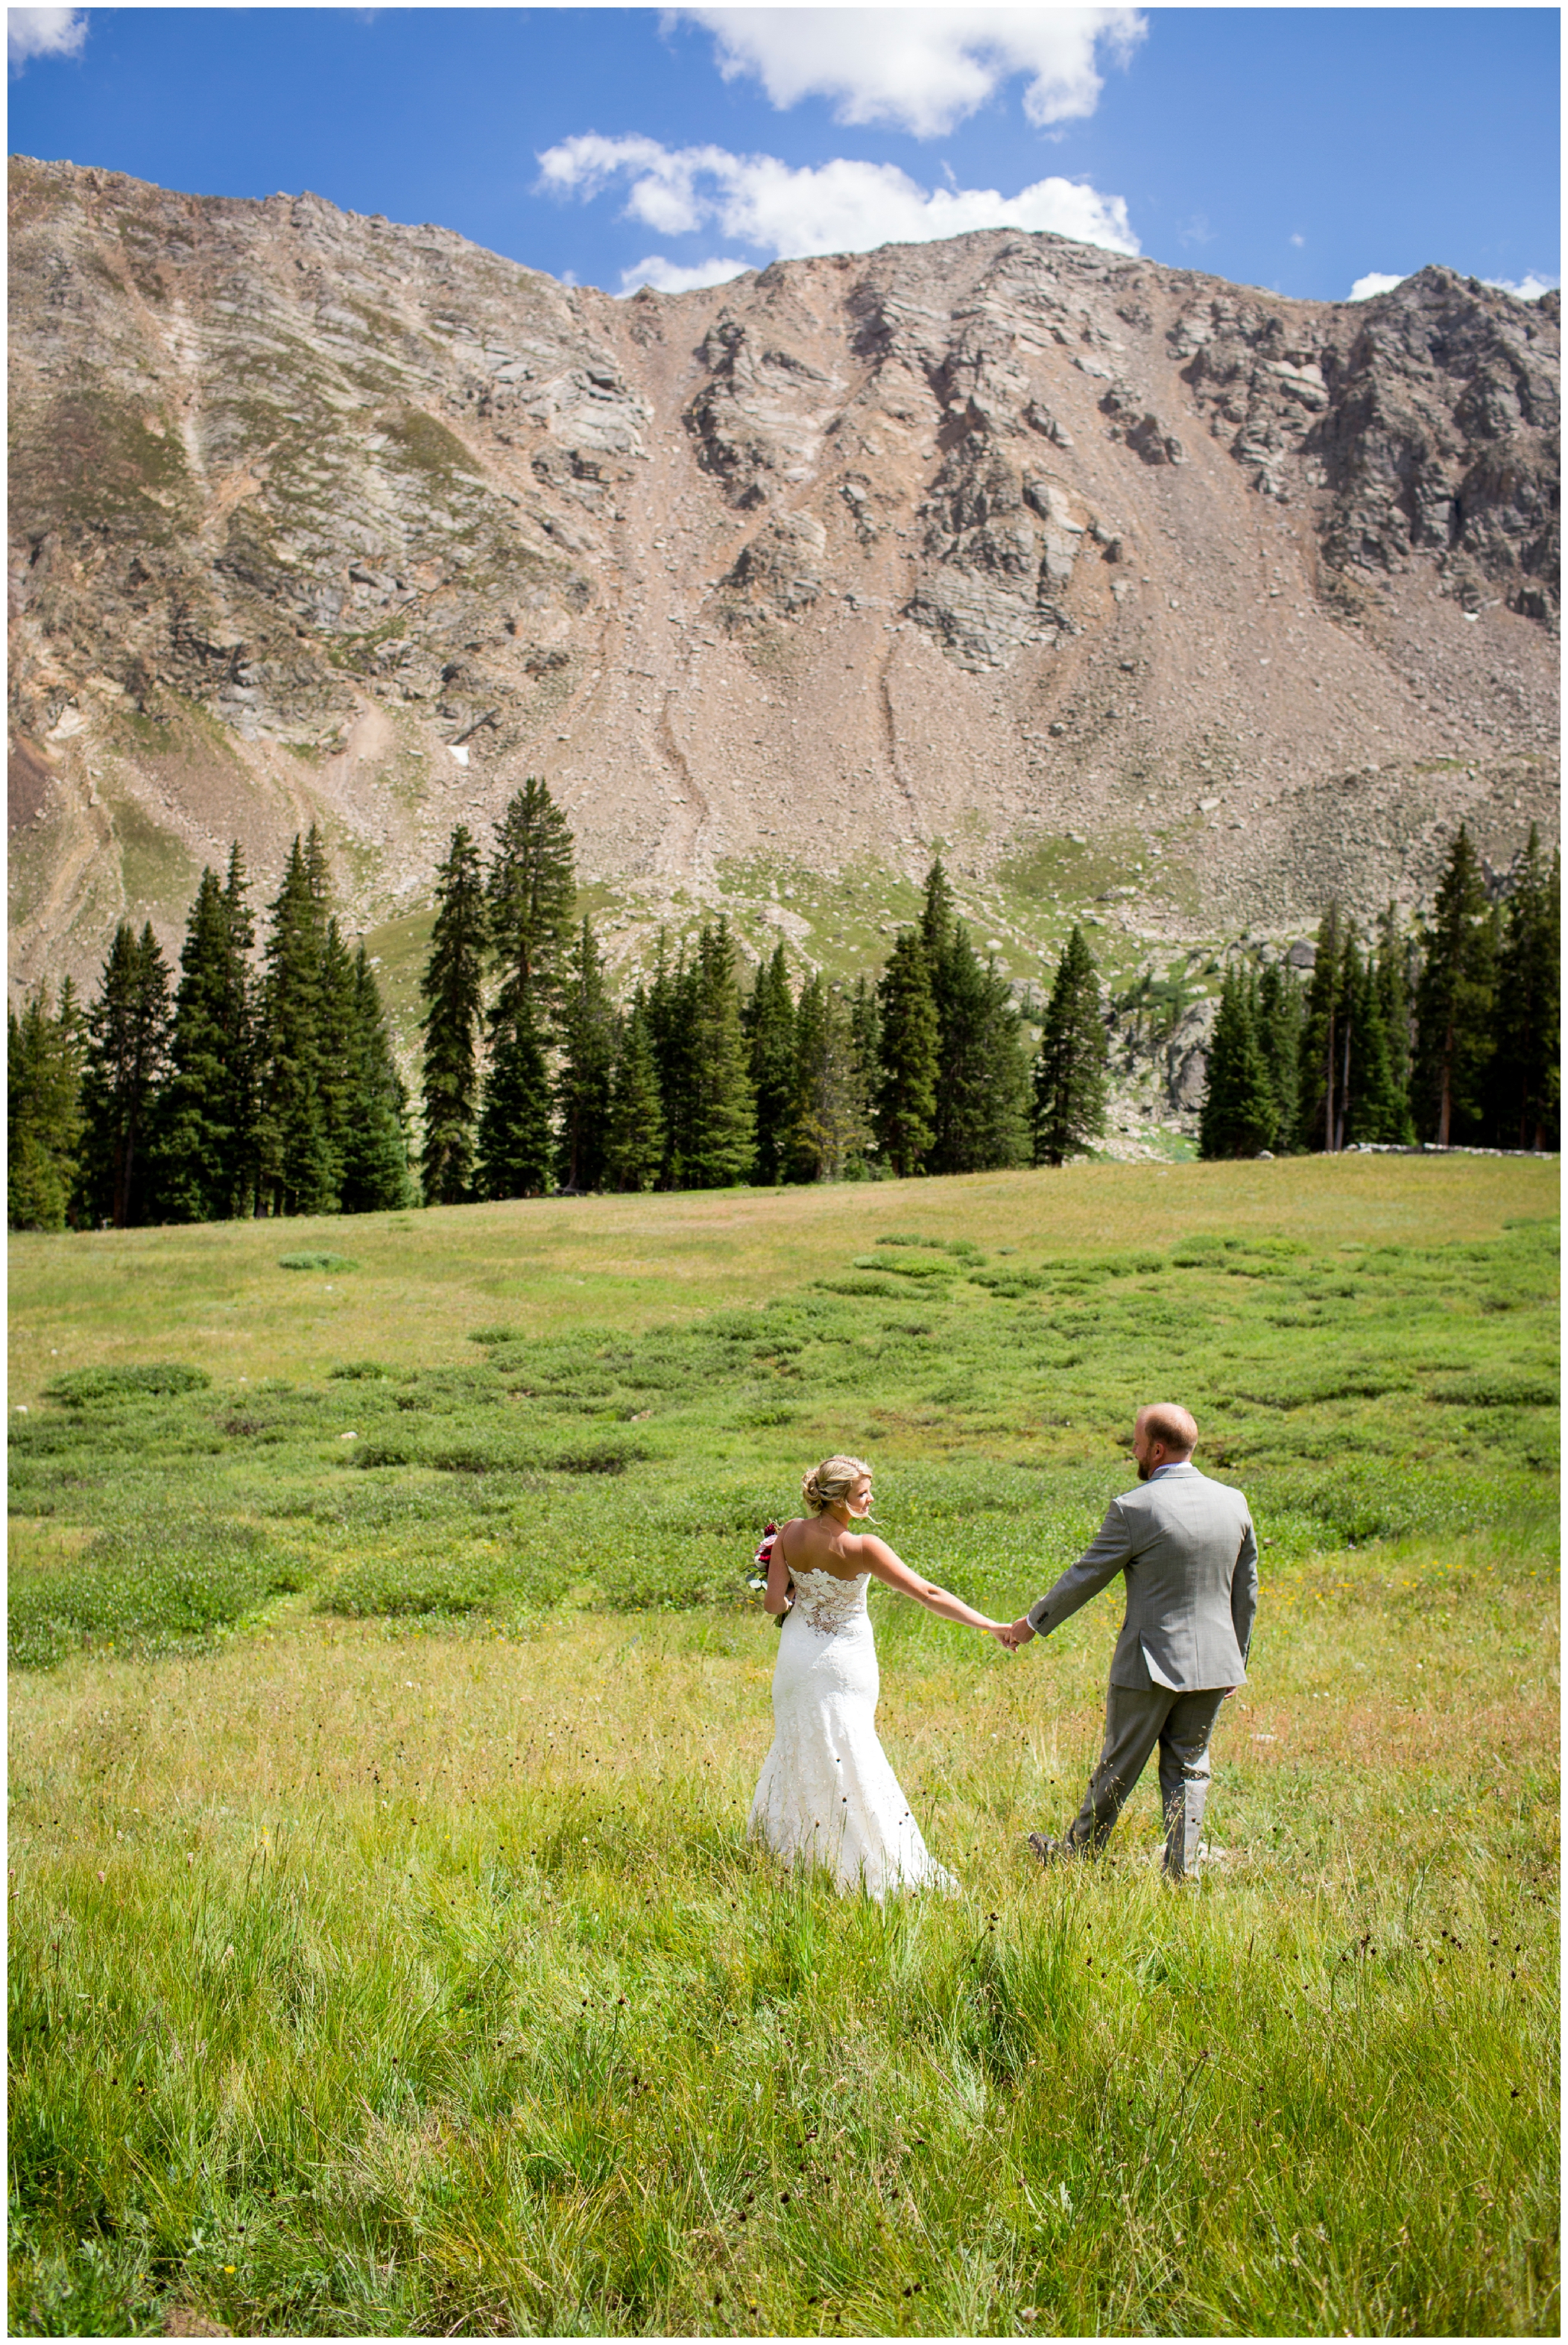 Black Mountain Lodge Arapahoe Basin Colorado wedding photographs 